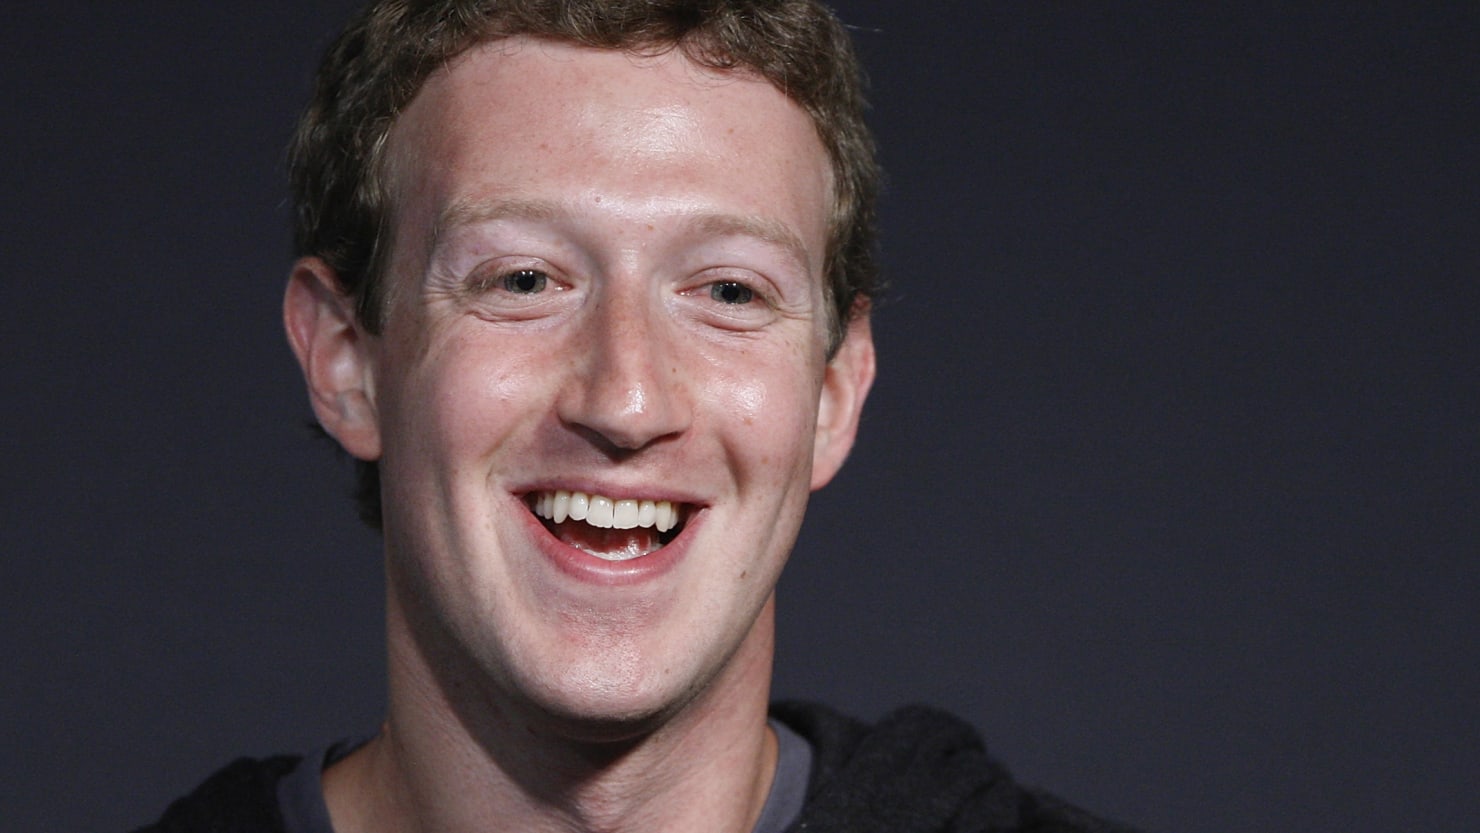 Mark Zuckerberg Lights Up Internet With His Macadamia-Eating Cattle in Hawaii